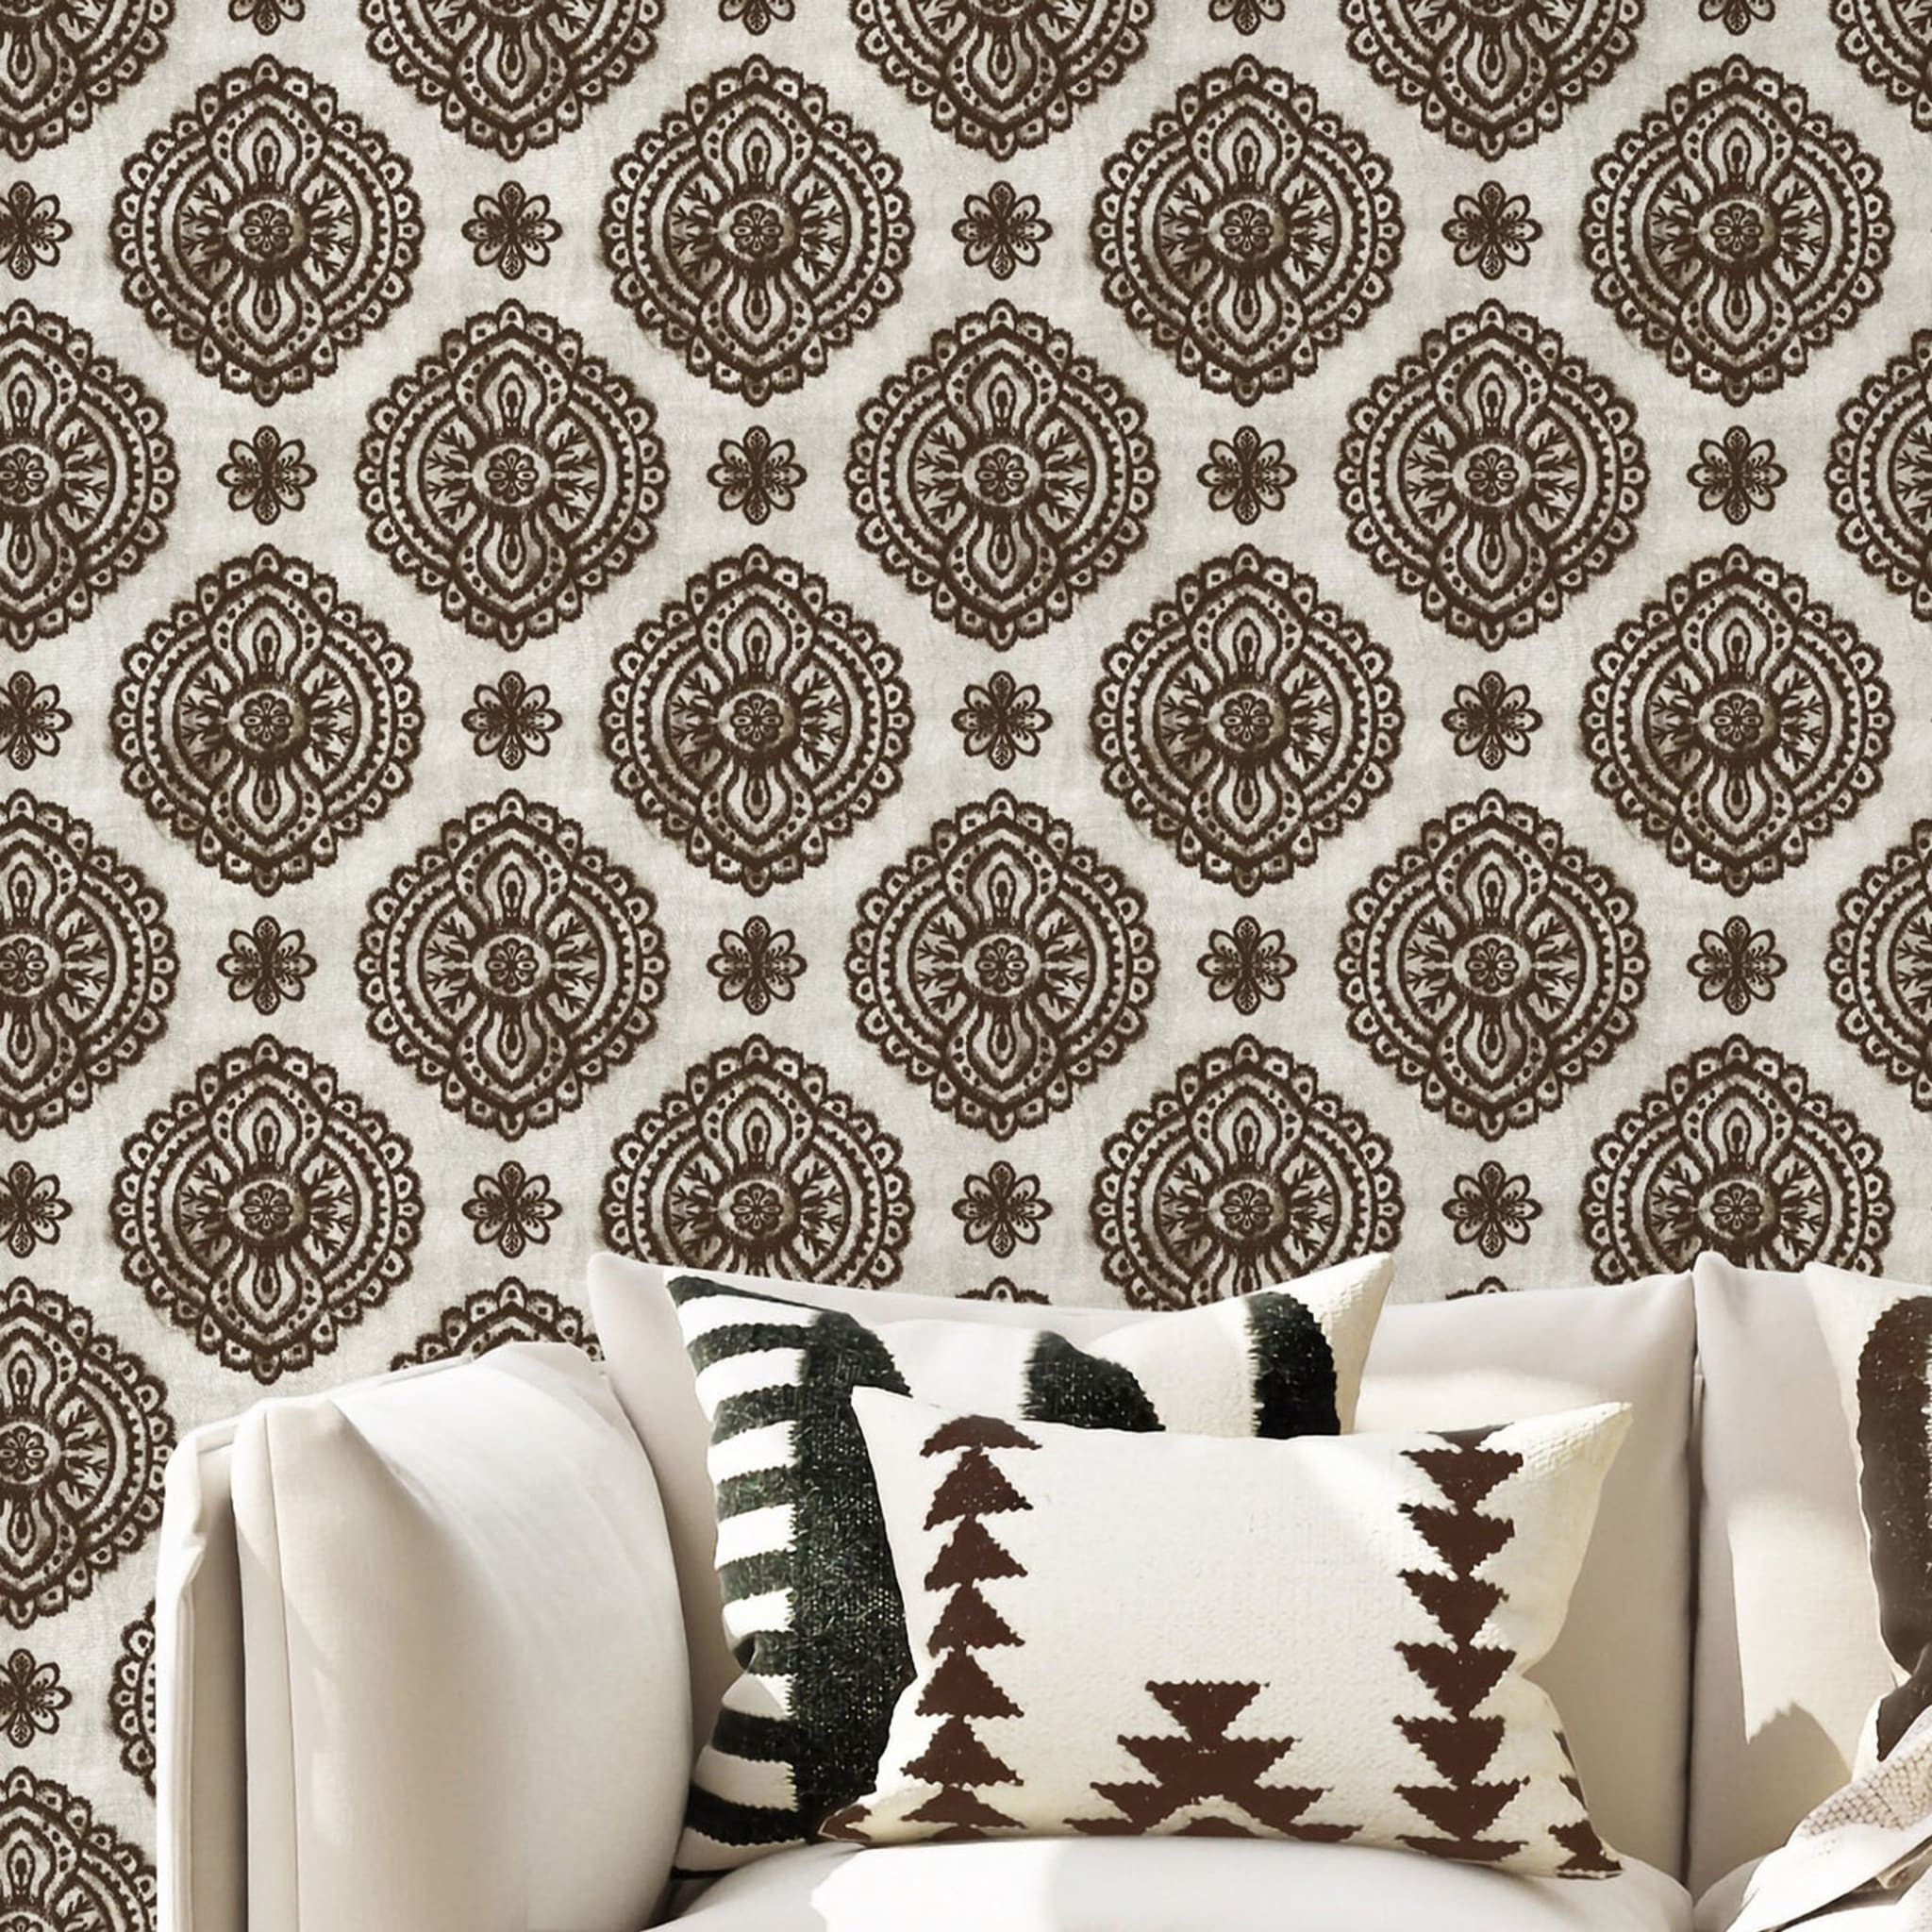 Pacri Chocolate Wallpaper - Alternative view 1